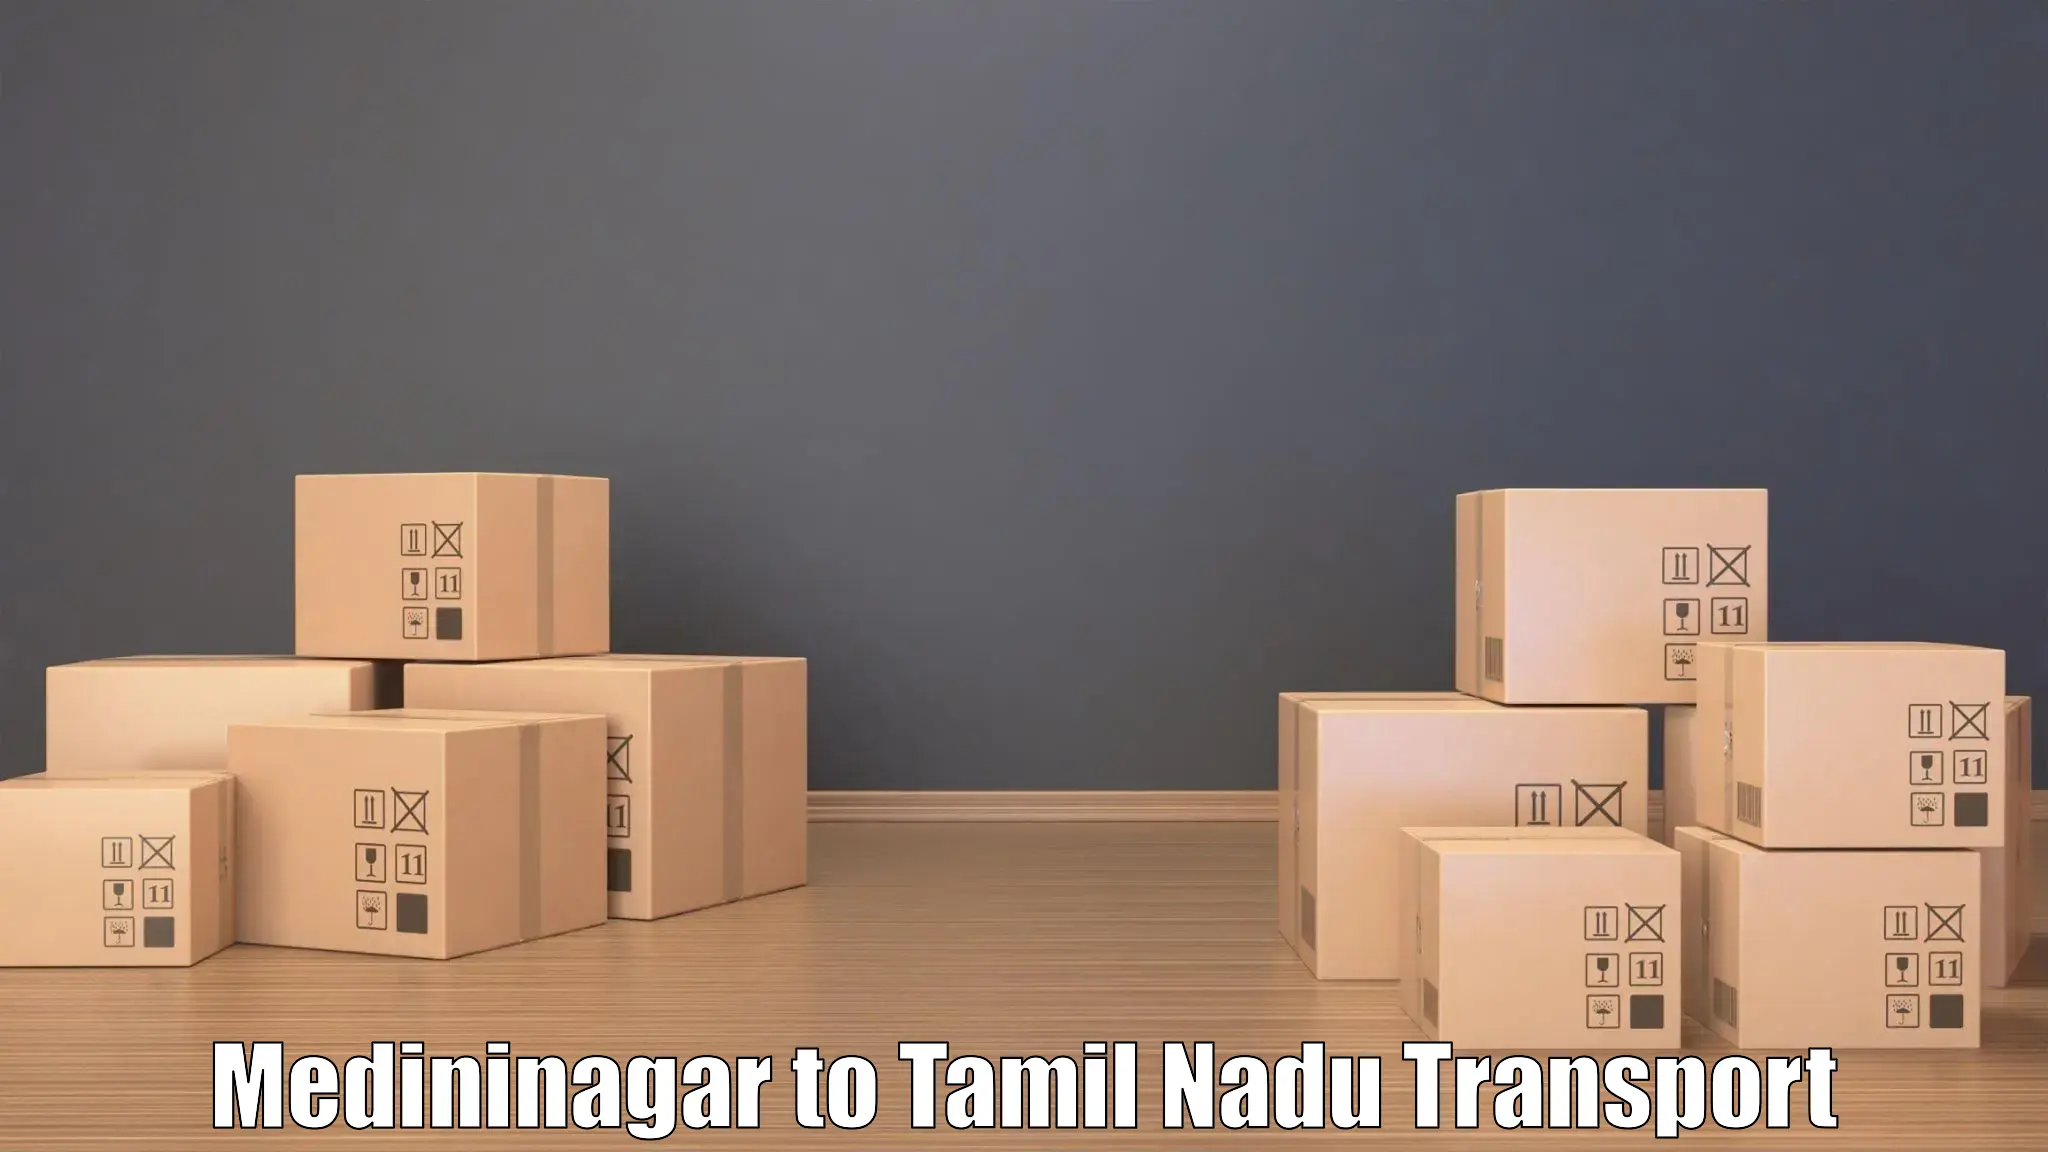 Express transport services Medininagar to Thiruvadanai